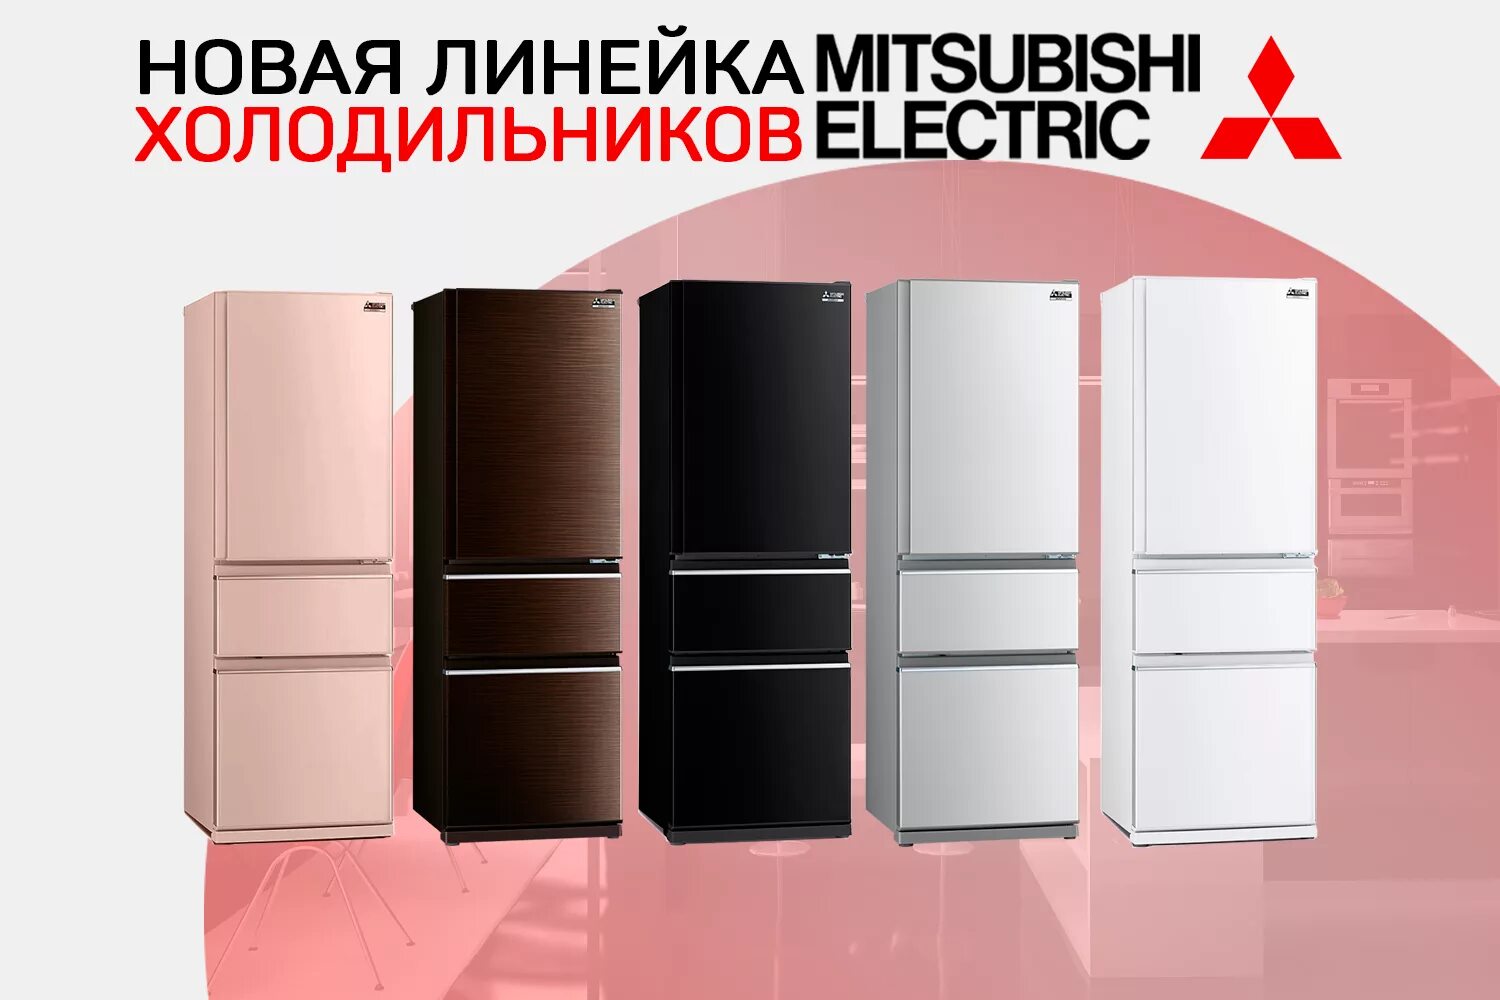 Митсубиси электрик холодильник. Многокамерный холодильник. Марки холодильников Мицубиси. Обогреватель холодильника Mitsubishi.